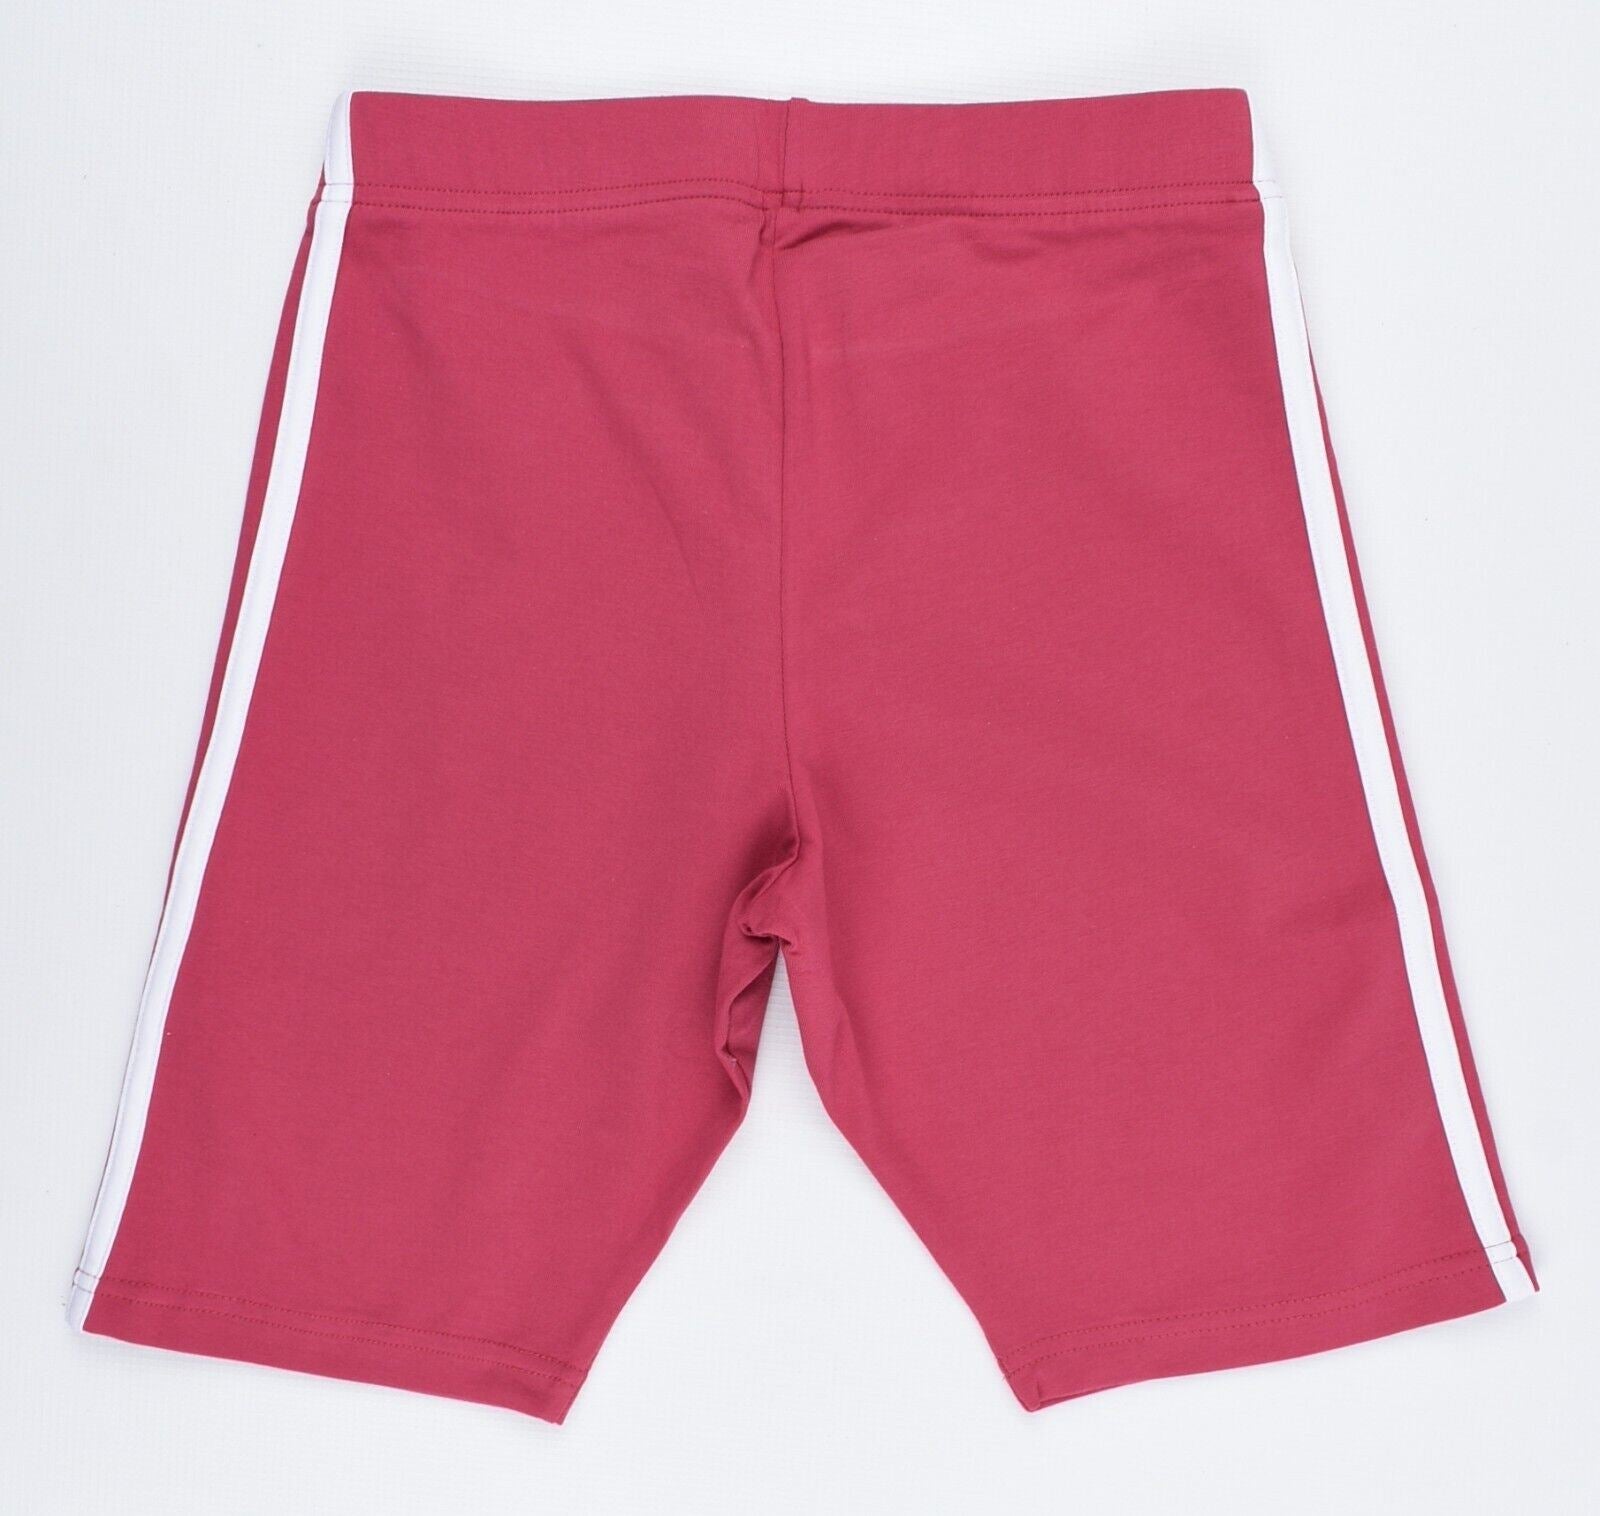 ADIDAS Women's 3 Stripes Essential Short Leggings Shorts, Pink, size S (UK 8-10)